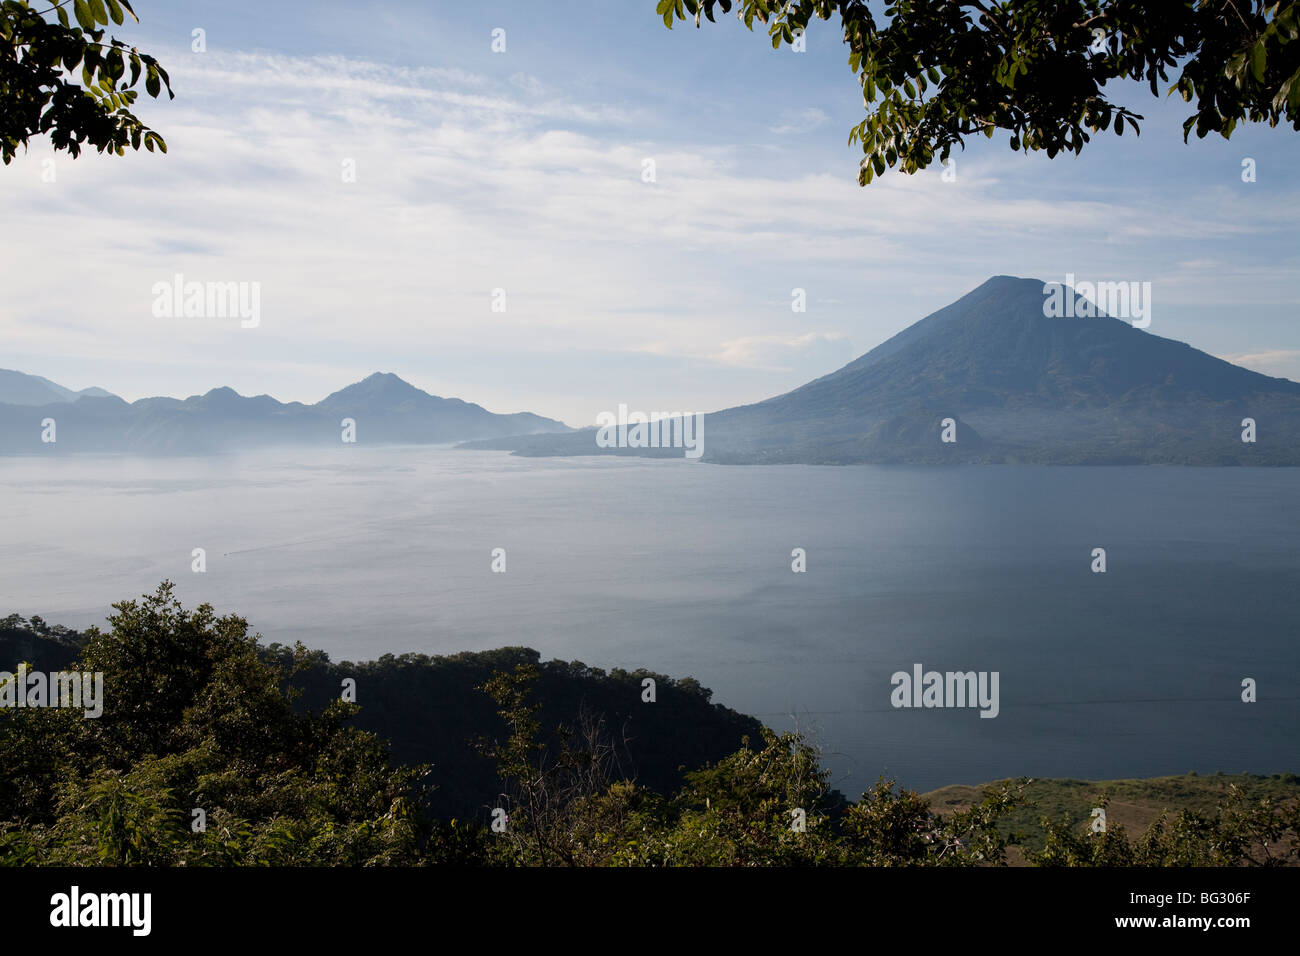 Volcanos San Pedro, Toliman and Atitlan at Lake Atitlan Guatemala. Stock Photo